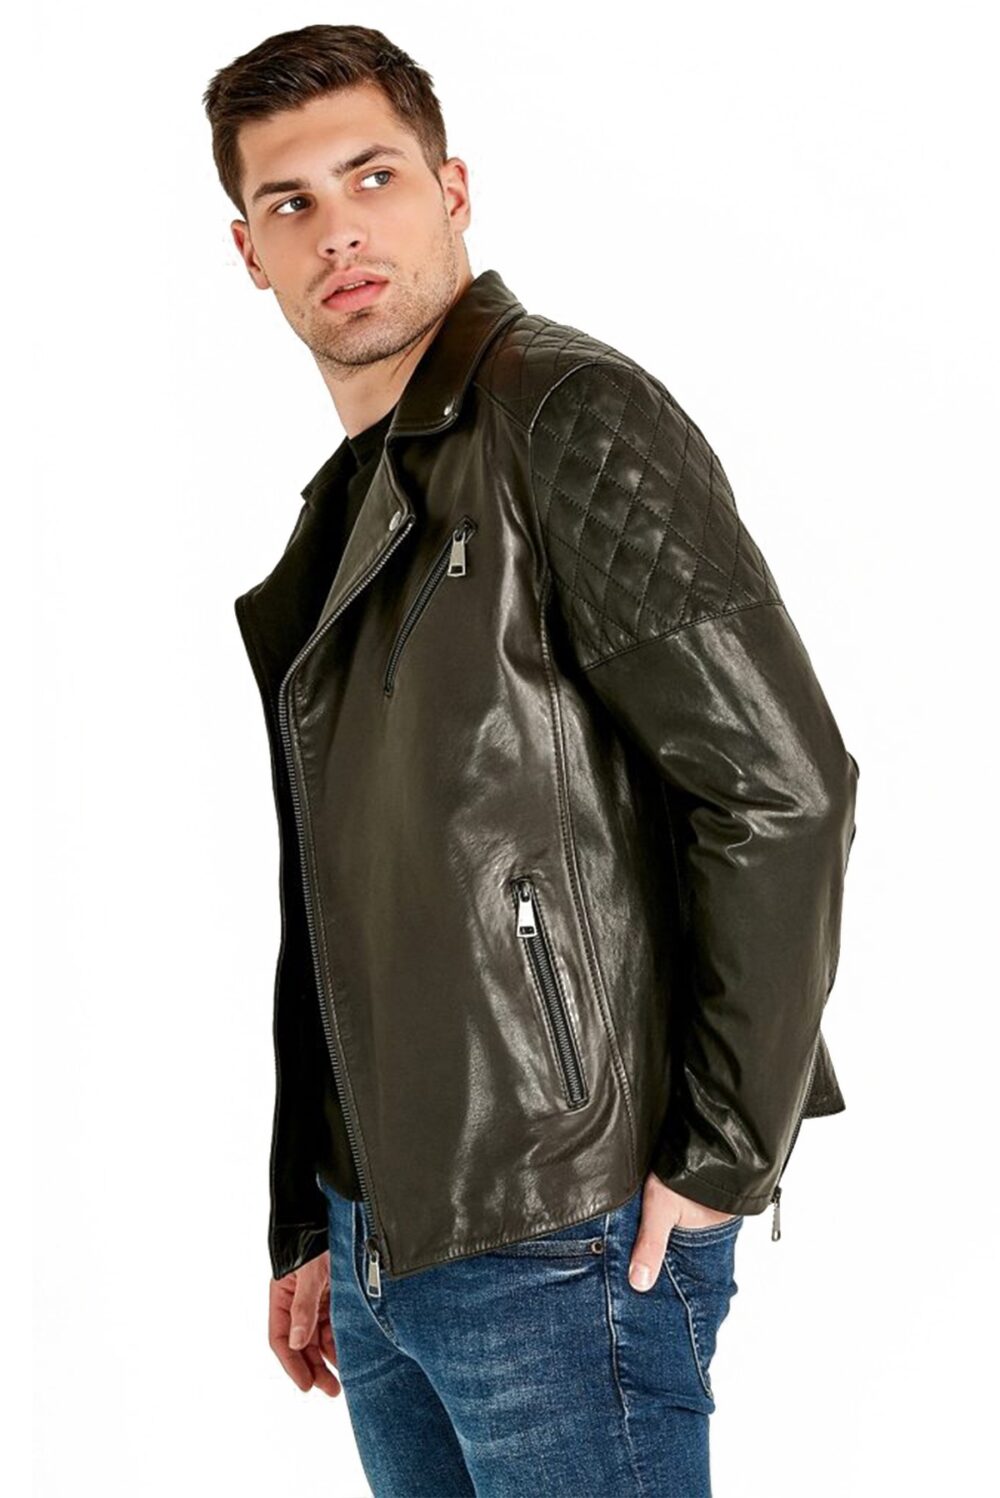 Black Sports Motorcycle Leather Jacket - Men Fashion in Iowa